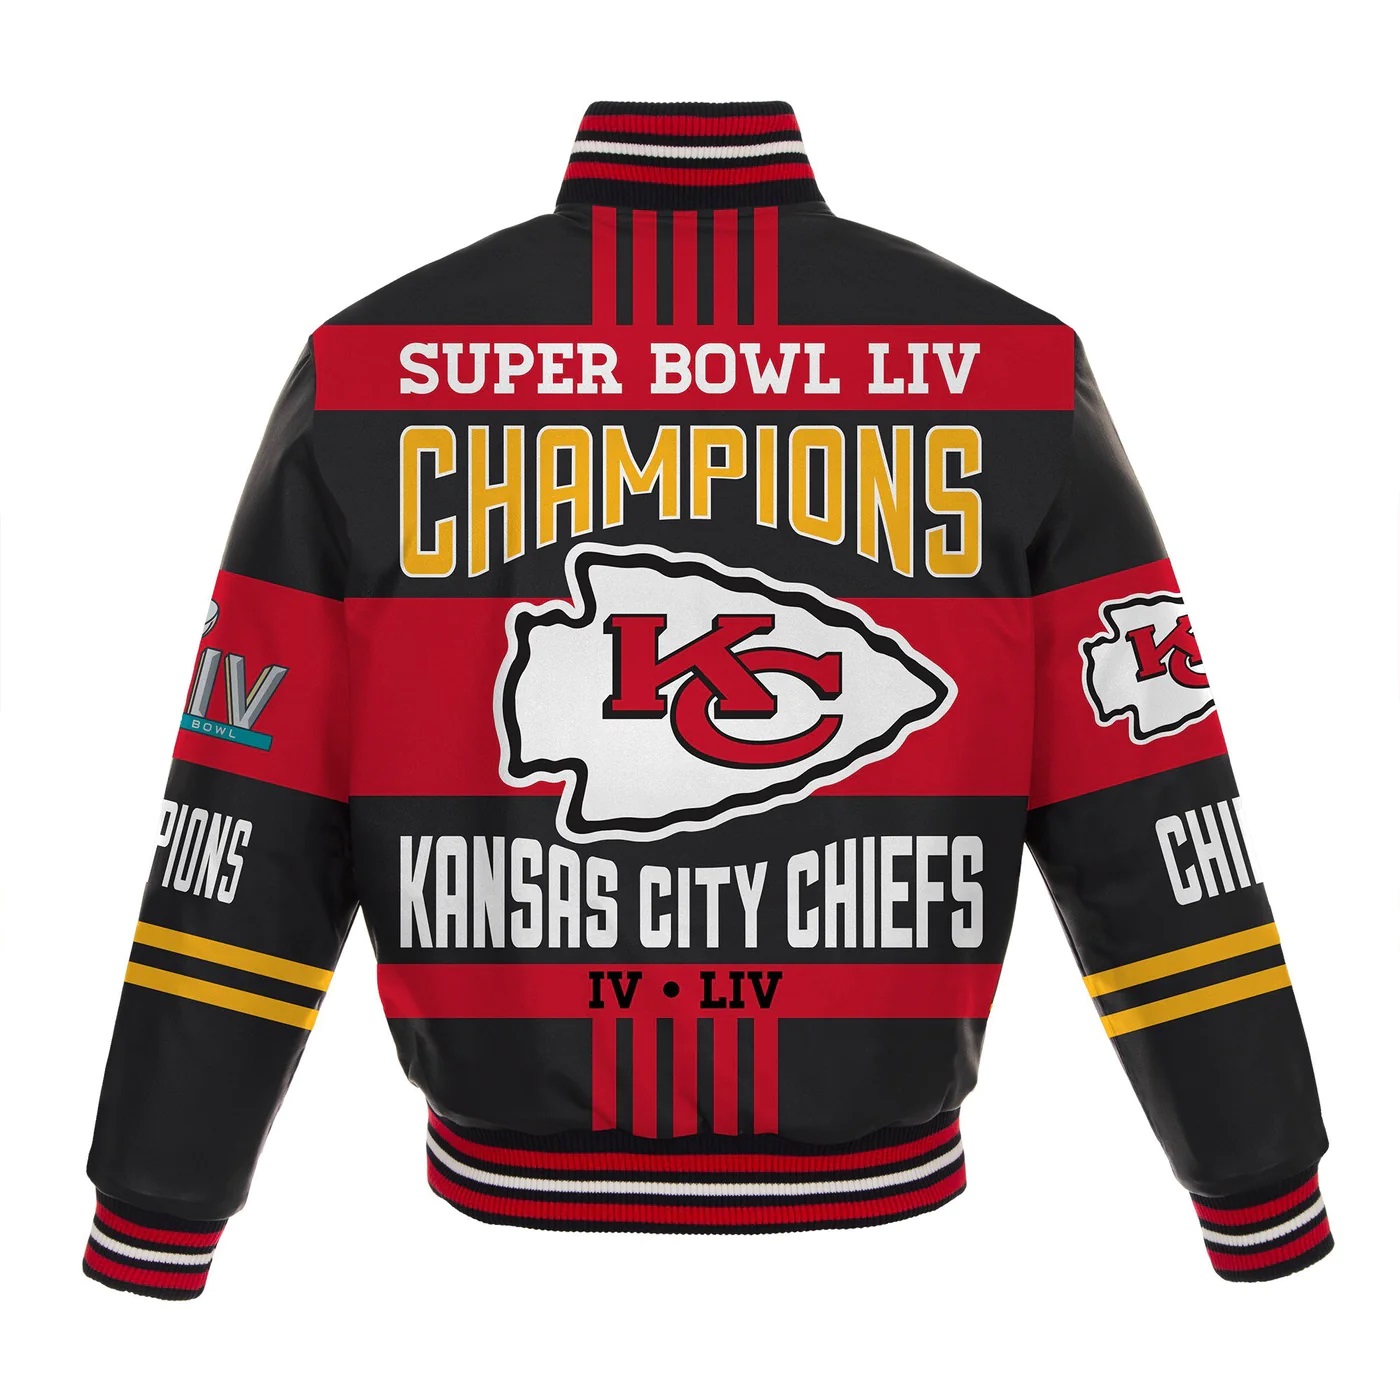 Kansas City Chiefs Super Bowl LIV Champions Leather Jacket